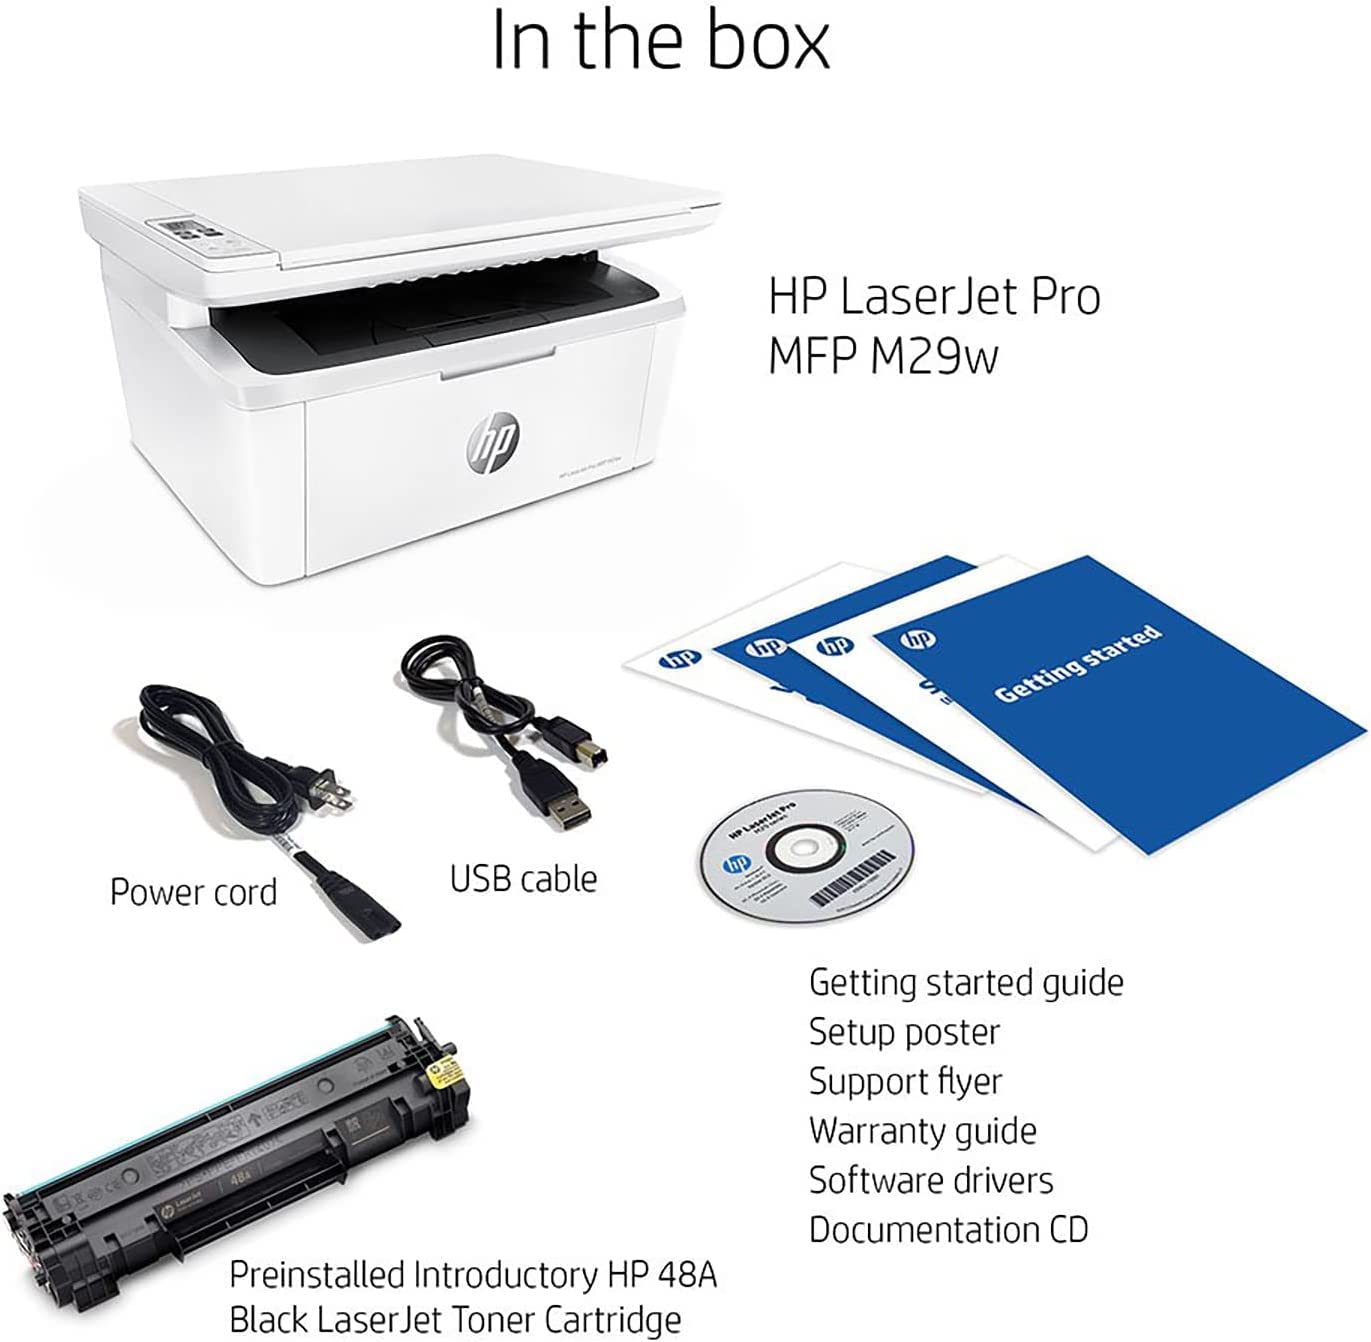 HP Laserjet Pro MFP M29W All-in-One Wireless Monochrome Laser Printer for Home Office, White - Print Scan Copy - 19 ppm, 600 x 600 dpi, 8.5 x 11.69, Hi-Speed USB, Cbmou External Webcam